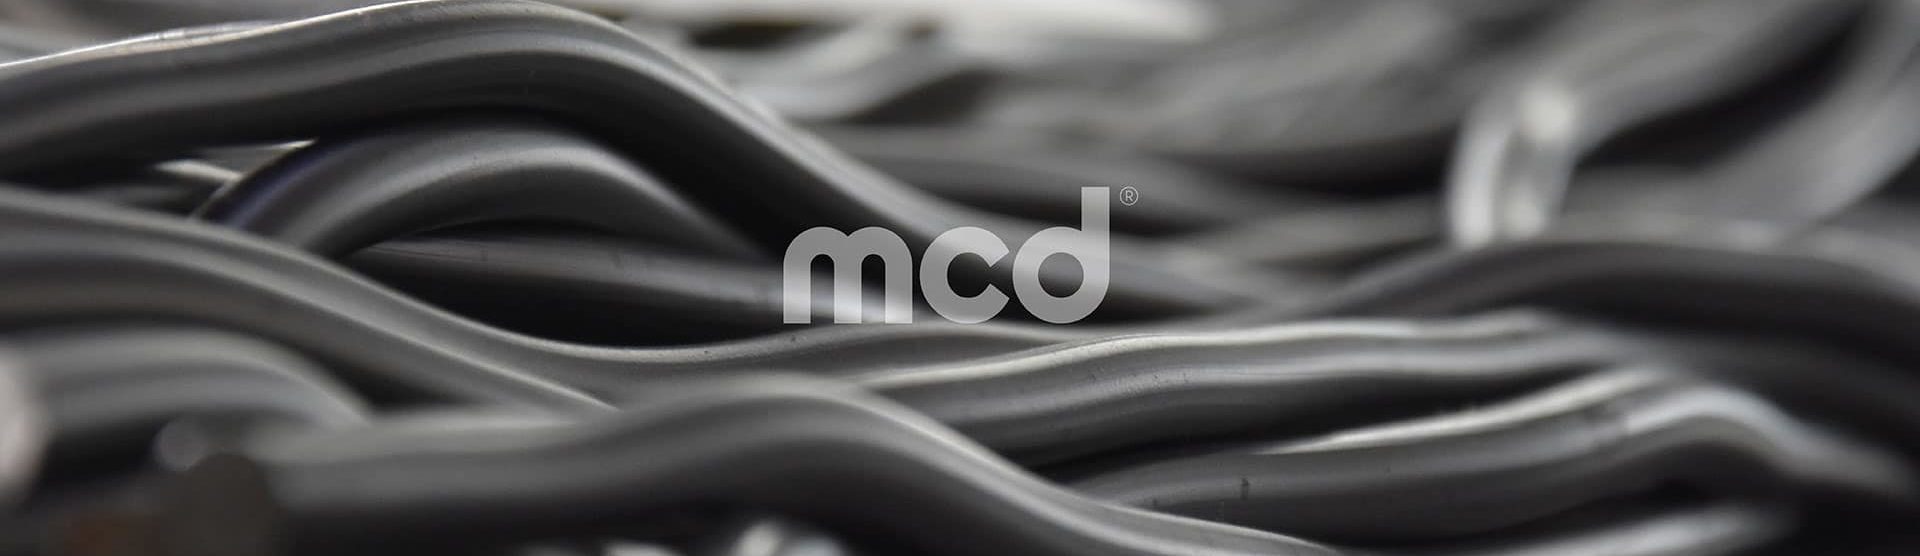 mcd produits joints elastomers